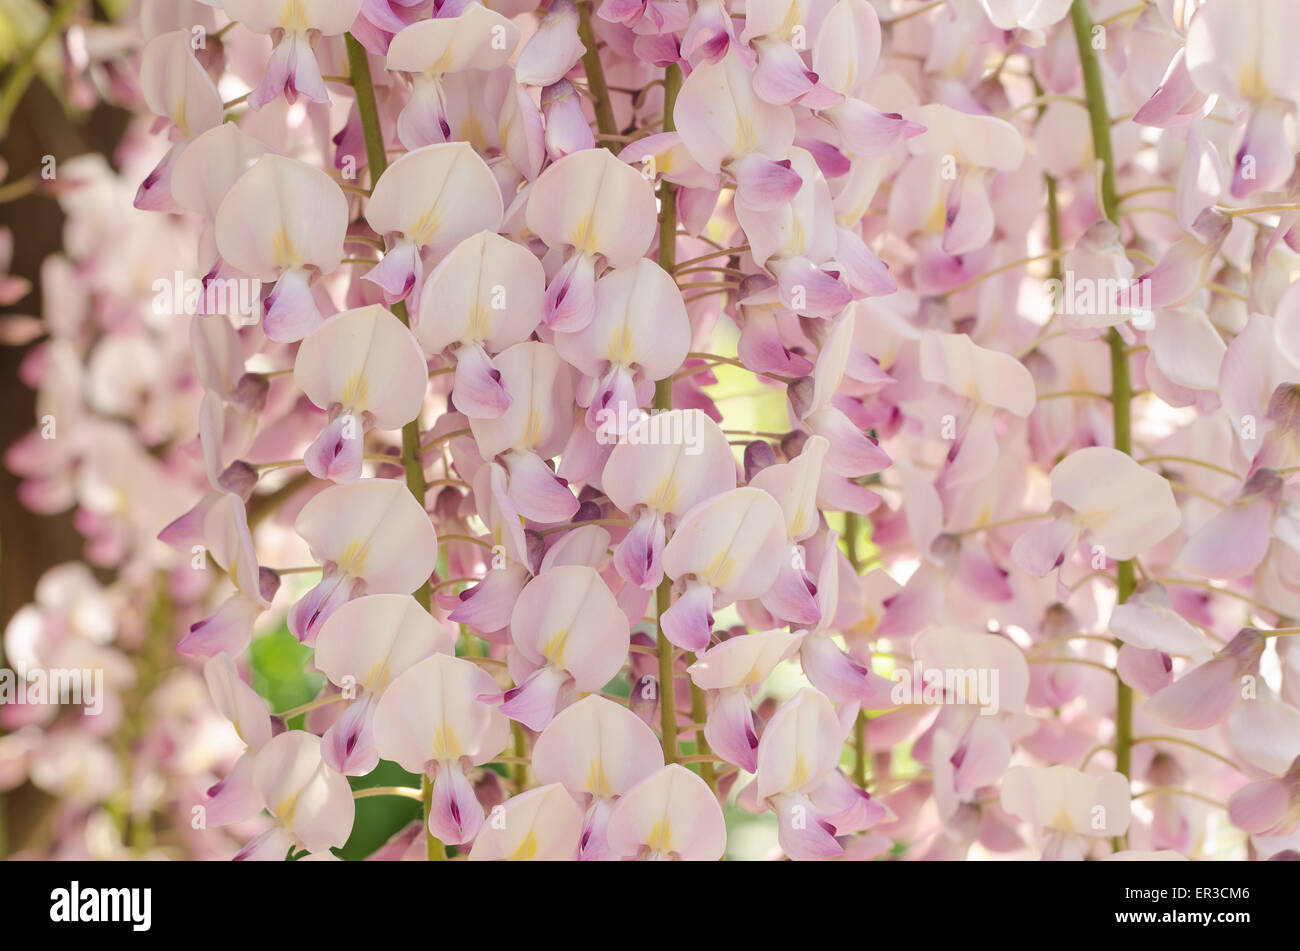 Detail of flowers of light pale violet delicate pink mauve purple lavender color Wisteria flowers Stock Photo